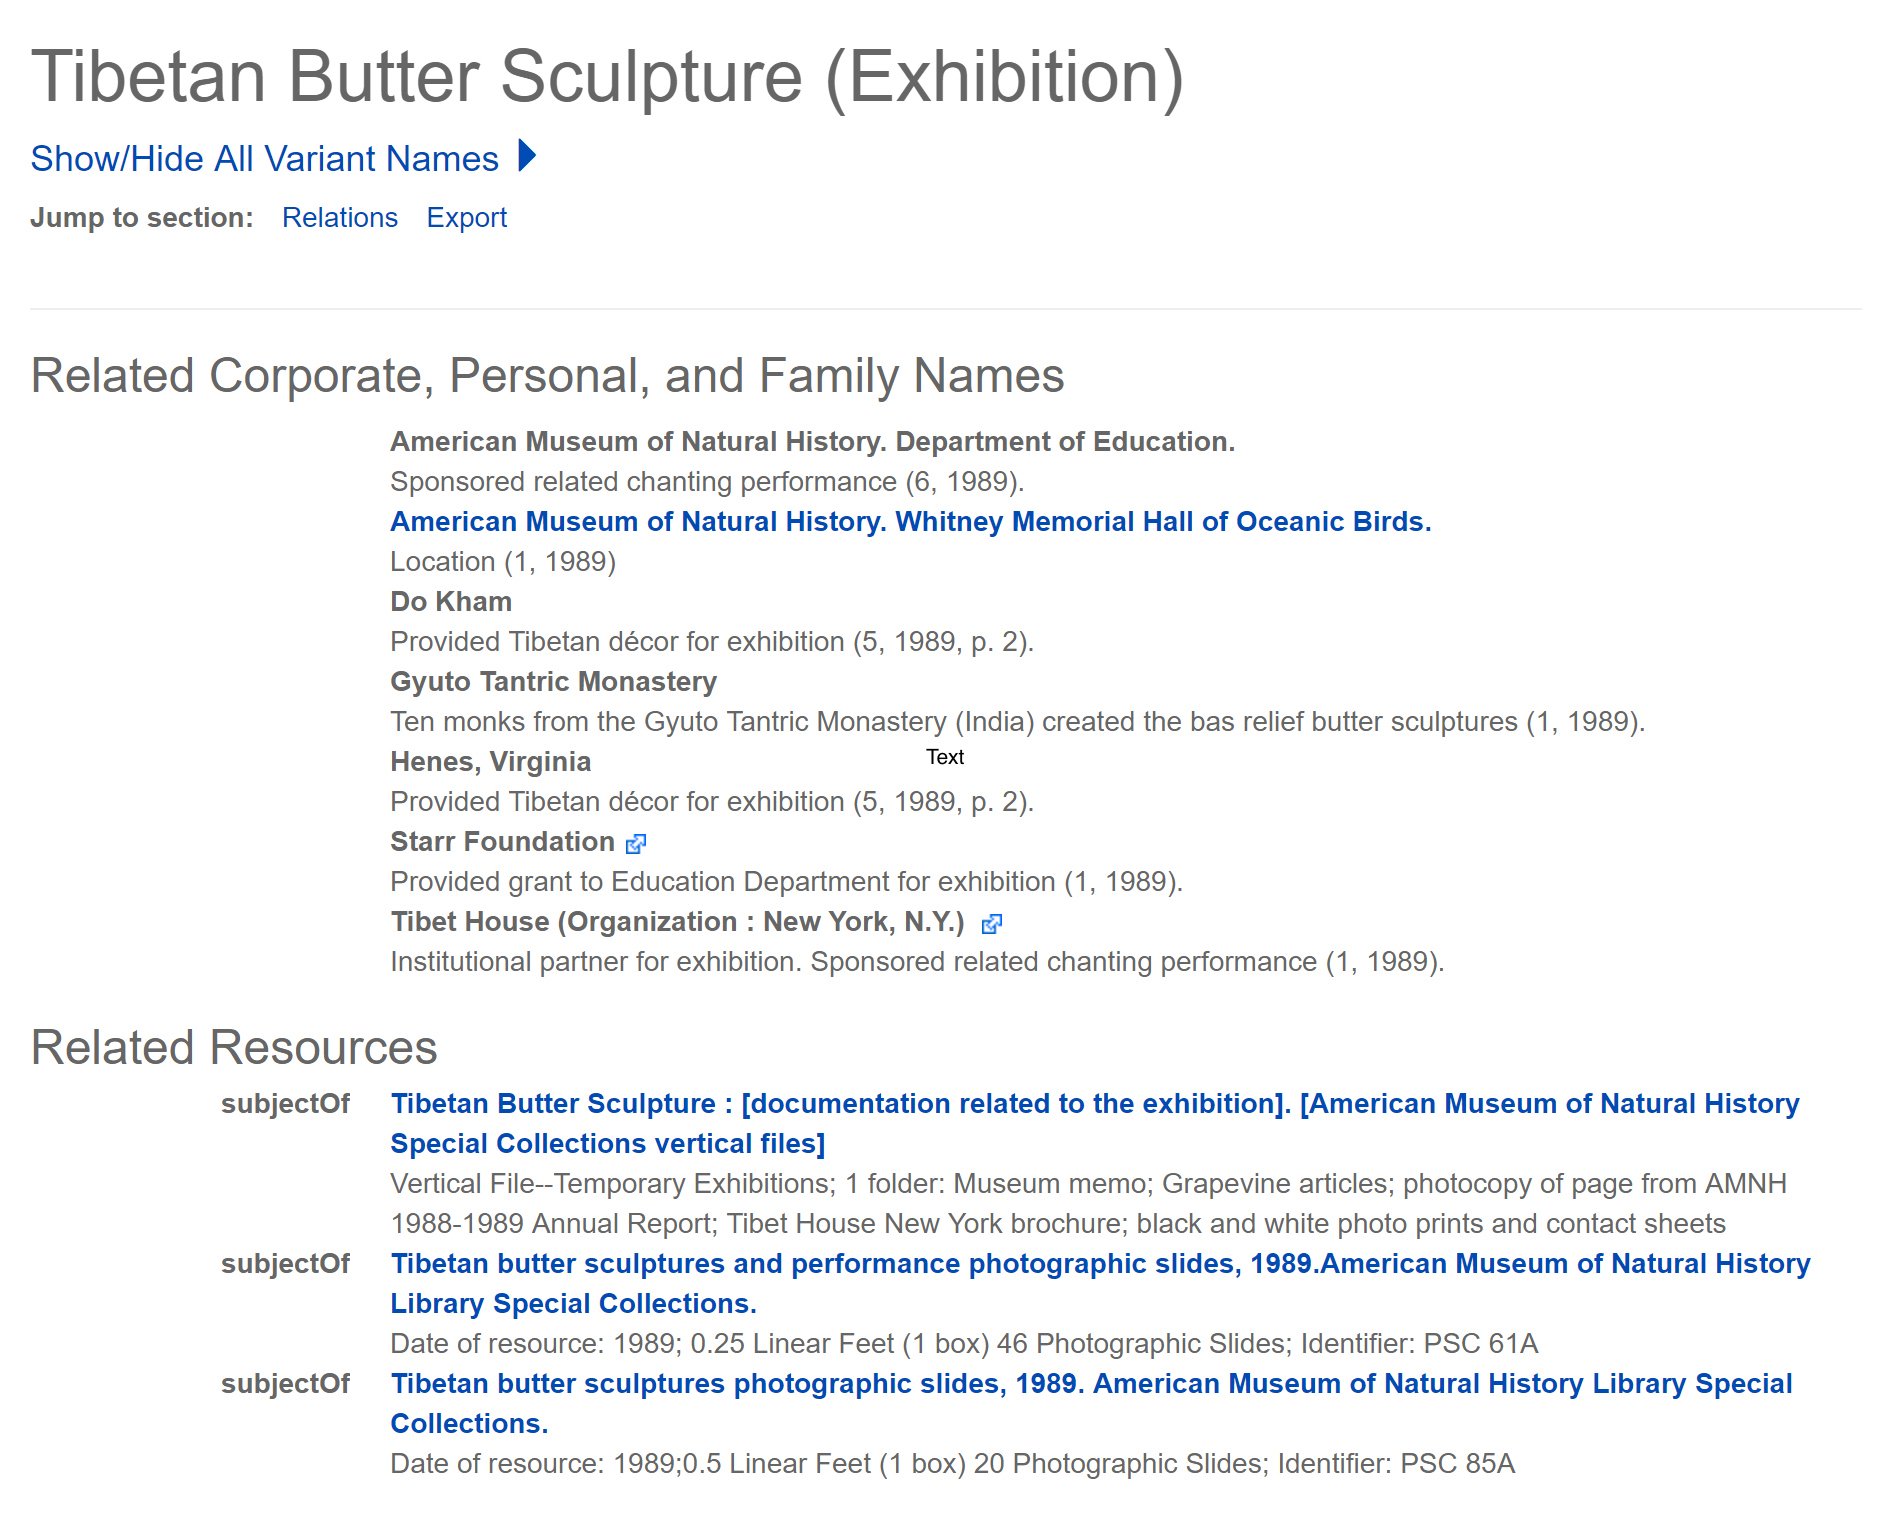 Screenshot of the Tibetan Butter Sculpture (Exhibition) relationship section